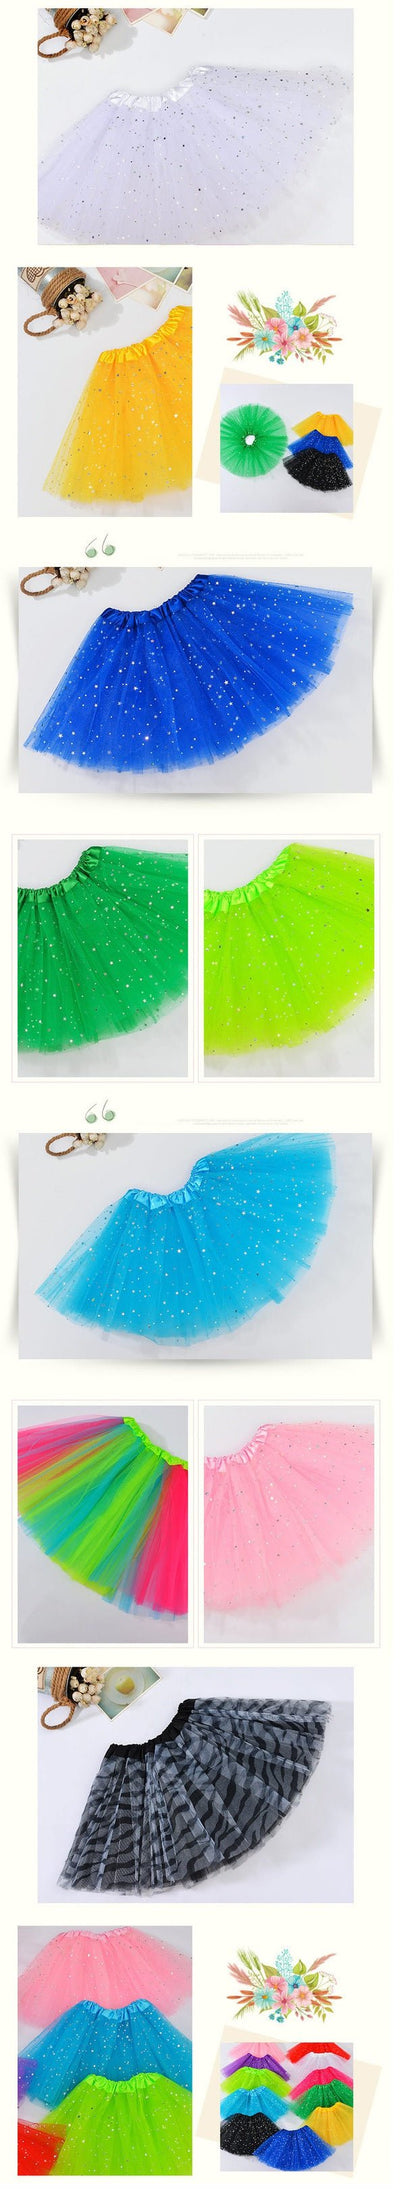 Sequin Tulle Tutu Skirt Ballet Kids Princess Dressup Party Baby Girls Dance Wear, Green, Adults